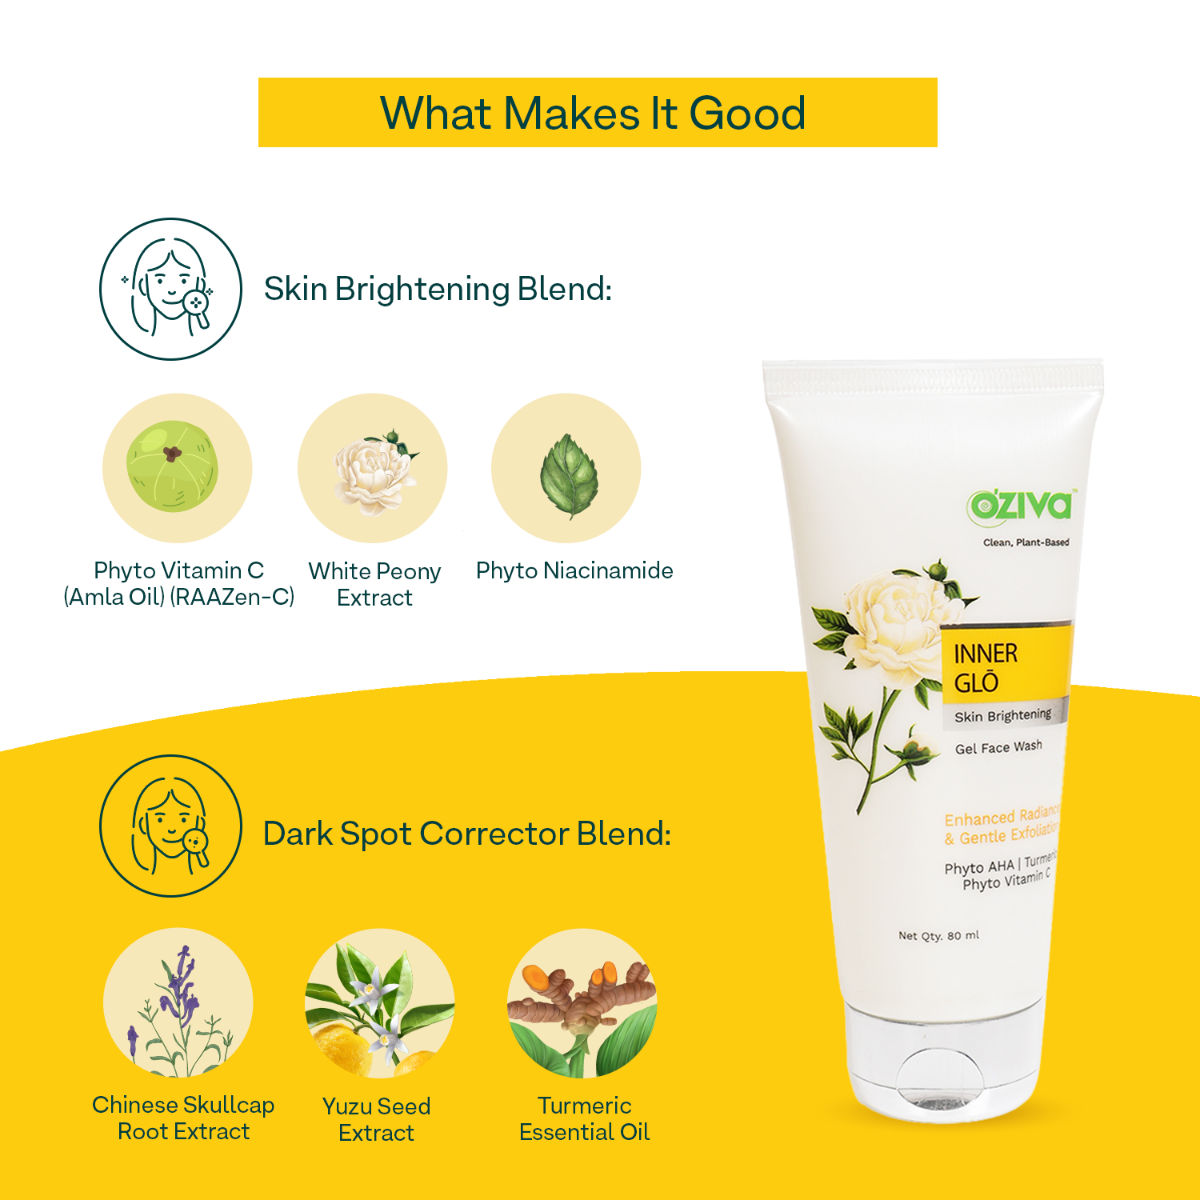 OZiva Inner Glo Skin Brightening Gel Face Wash, 80 ml, Pack of 1 